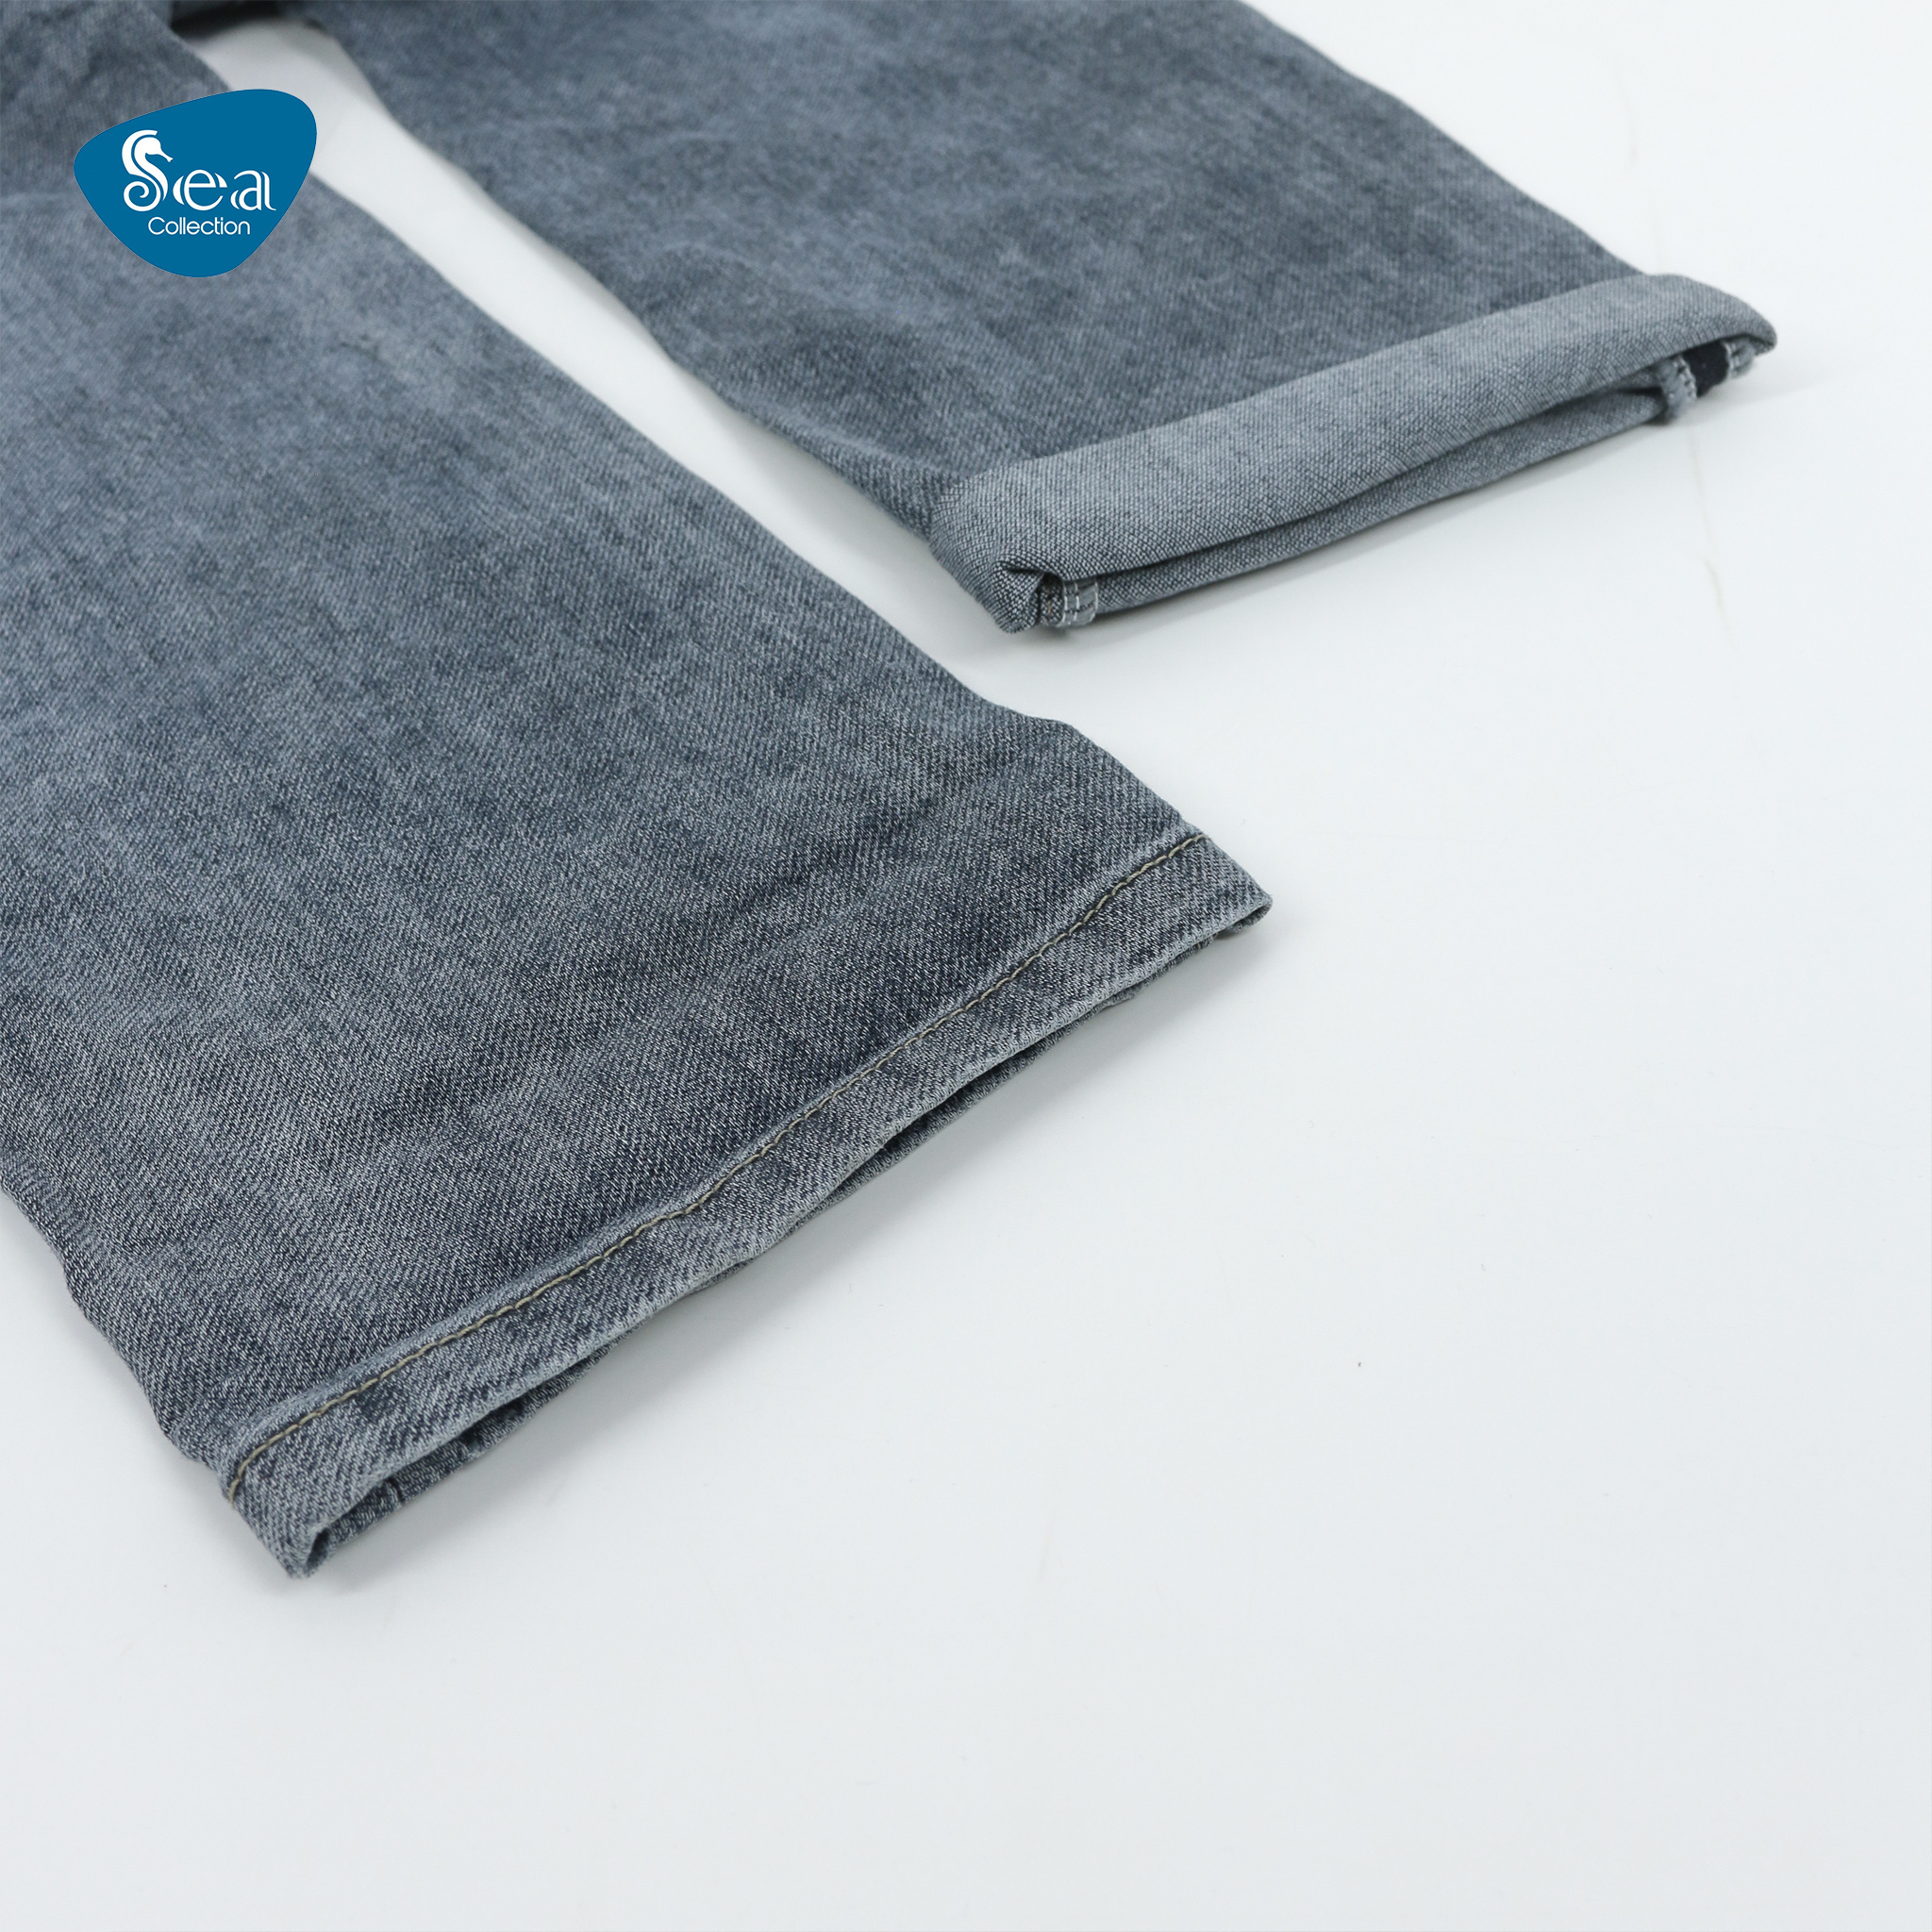 Quần Jeans Nam Sea Collection vải denim mềm mại, co giãn nhẹ, form REGULAR 8242